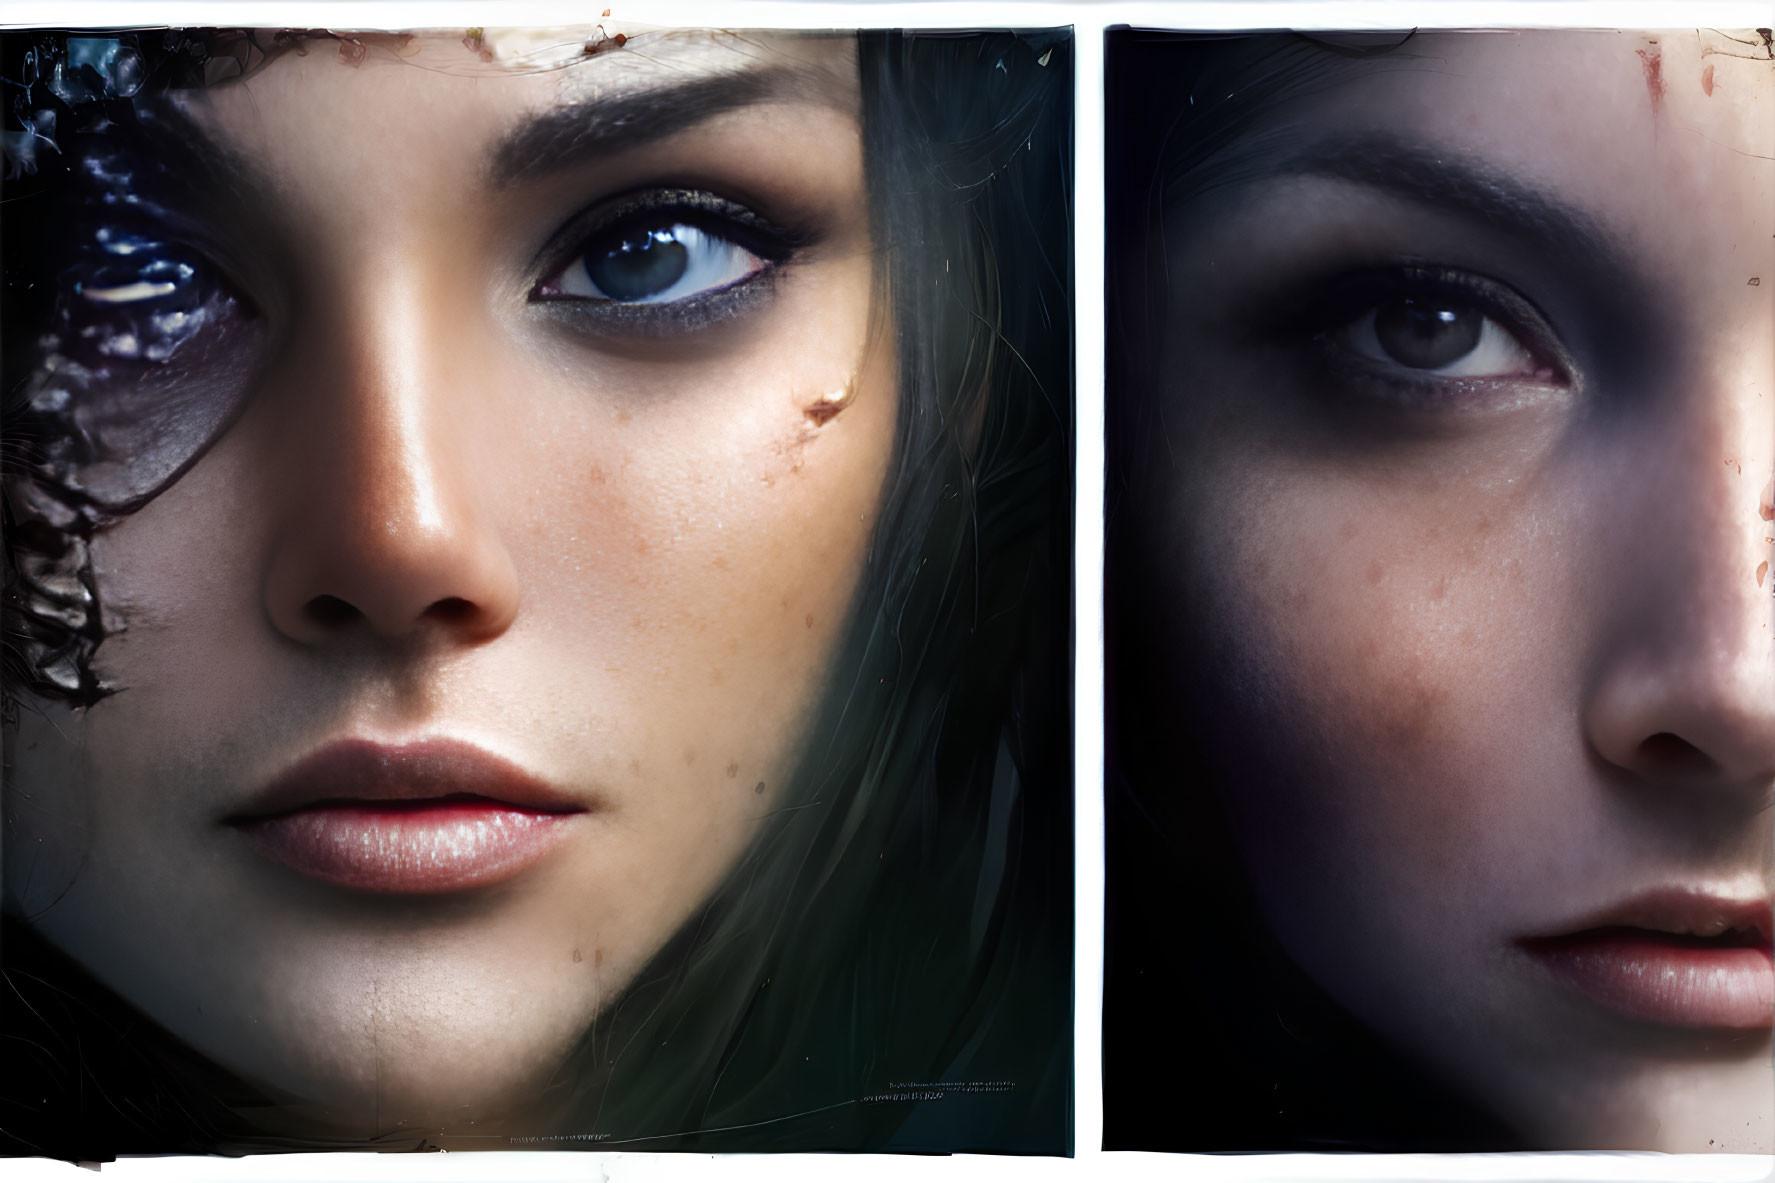 Artistic representation of woman's dual nature in split face image